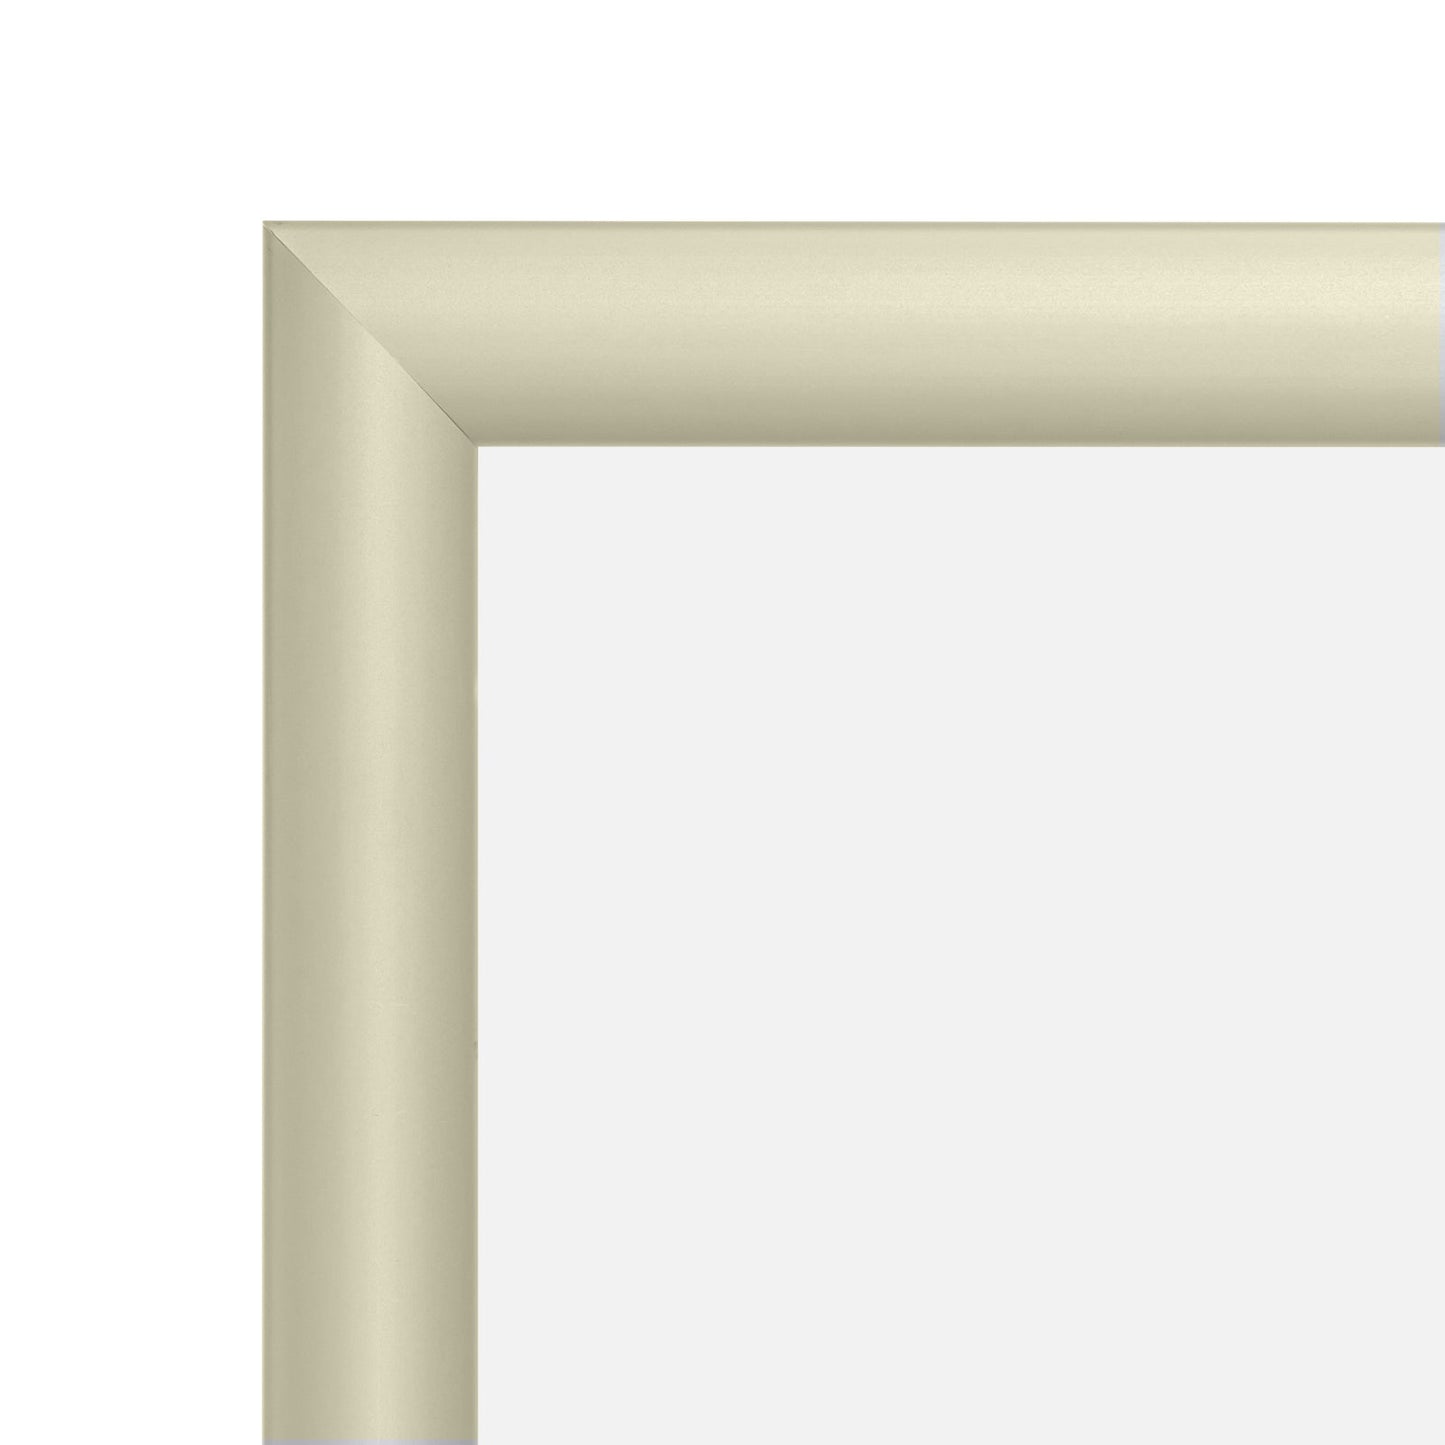 27x40 Cream SnapeZo® Snap Frame - 1.2" Profile - Snap Frames Direct